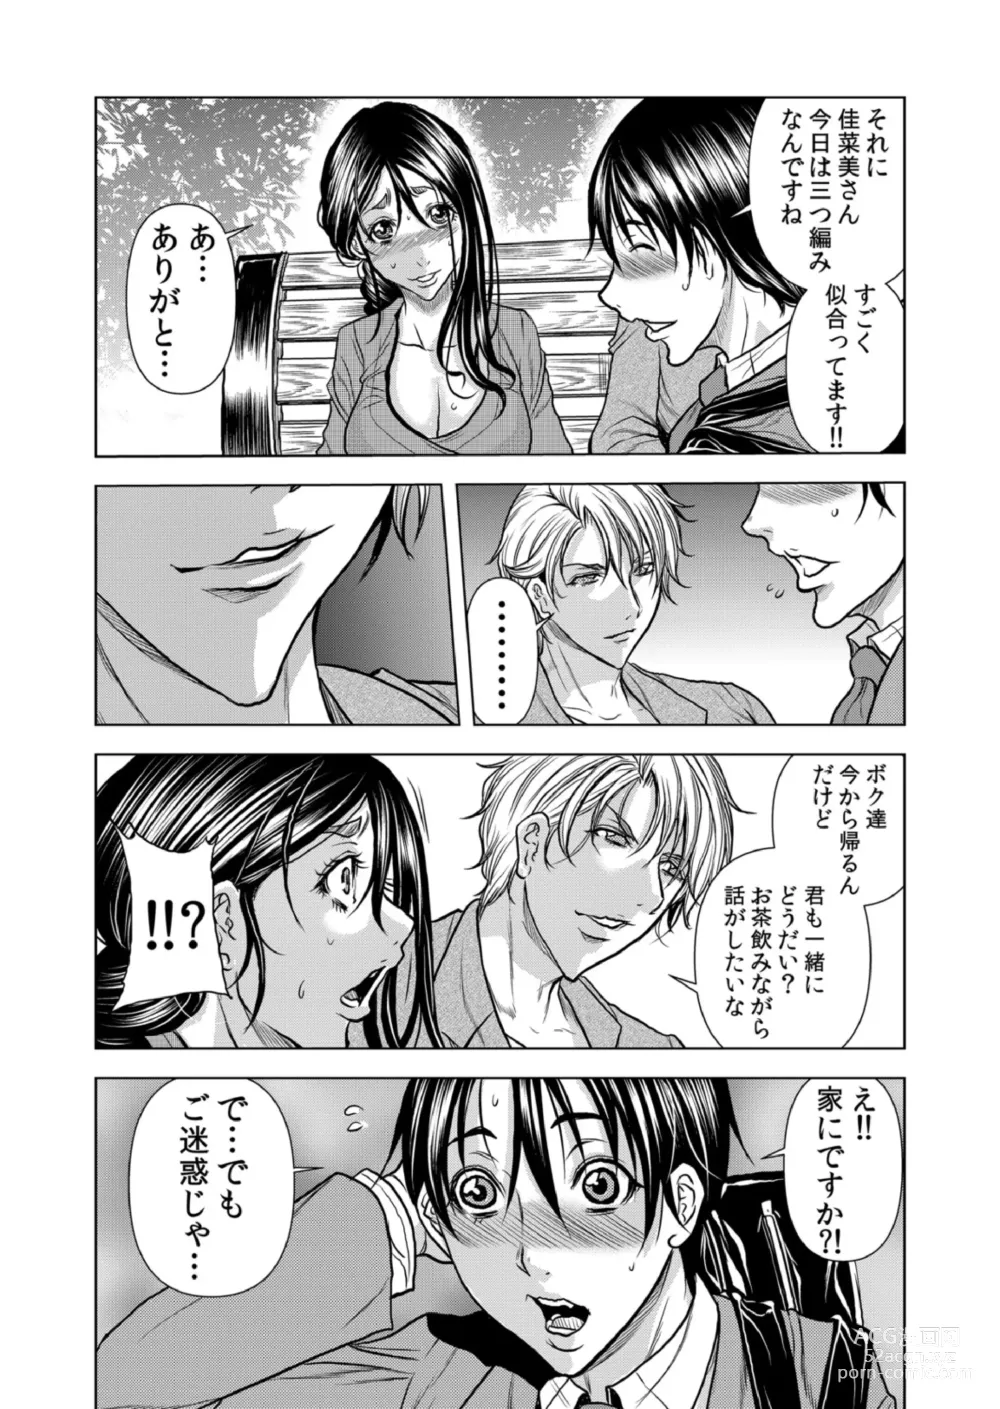 Page 3 of manga Mamasan,yobai ha OK desuka? VOL9